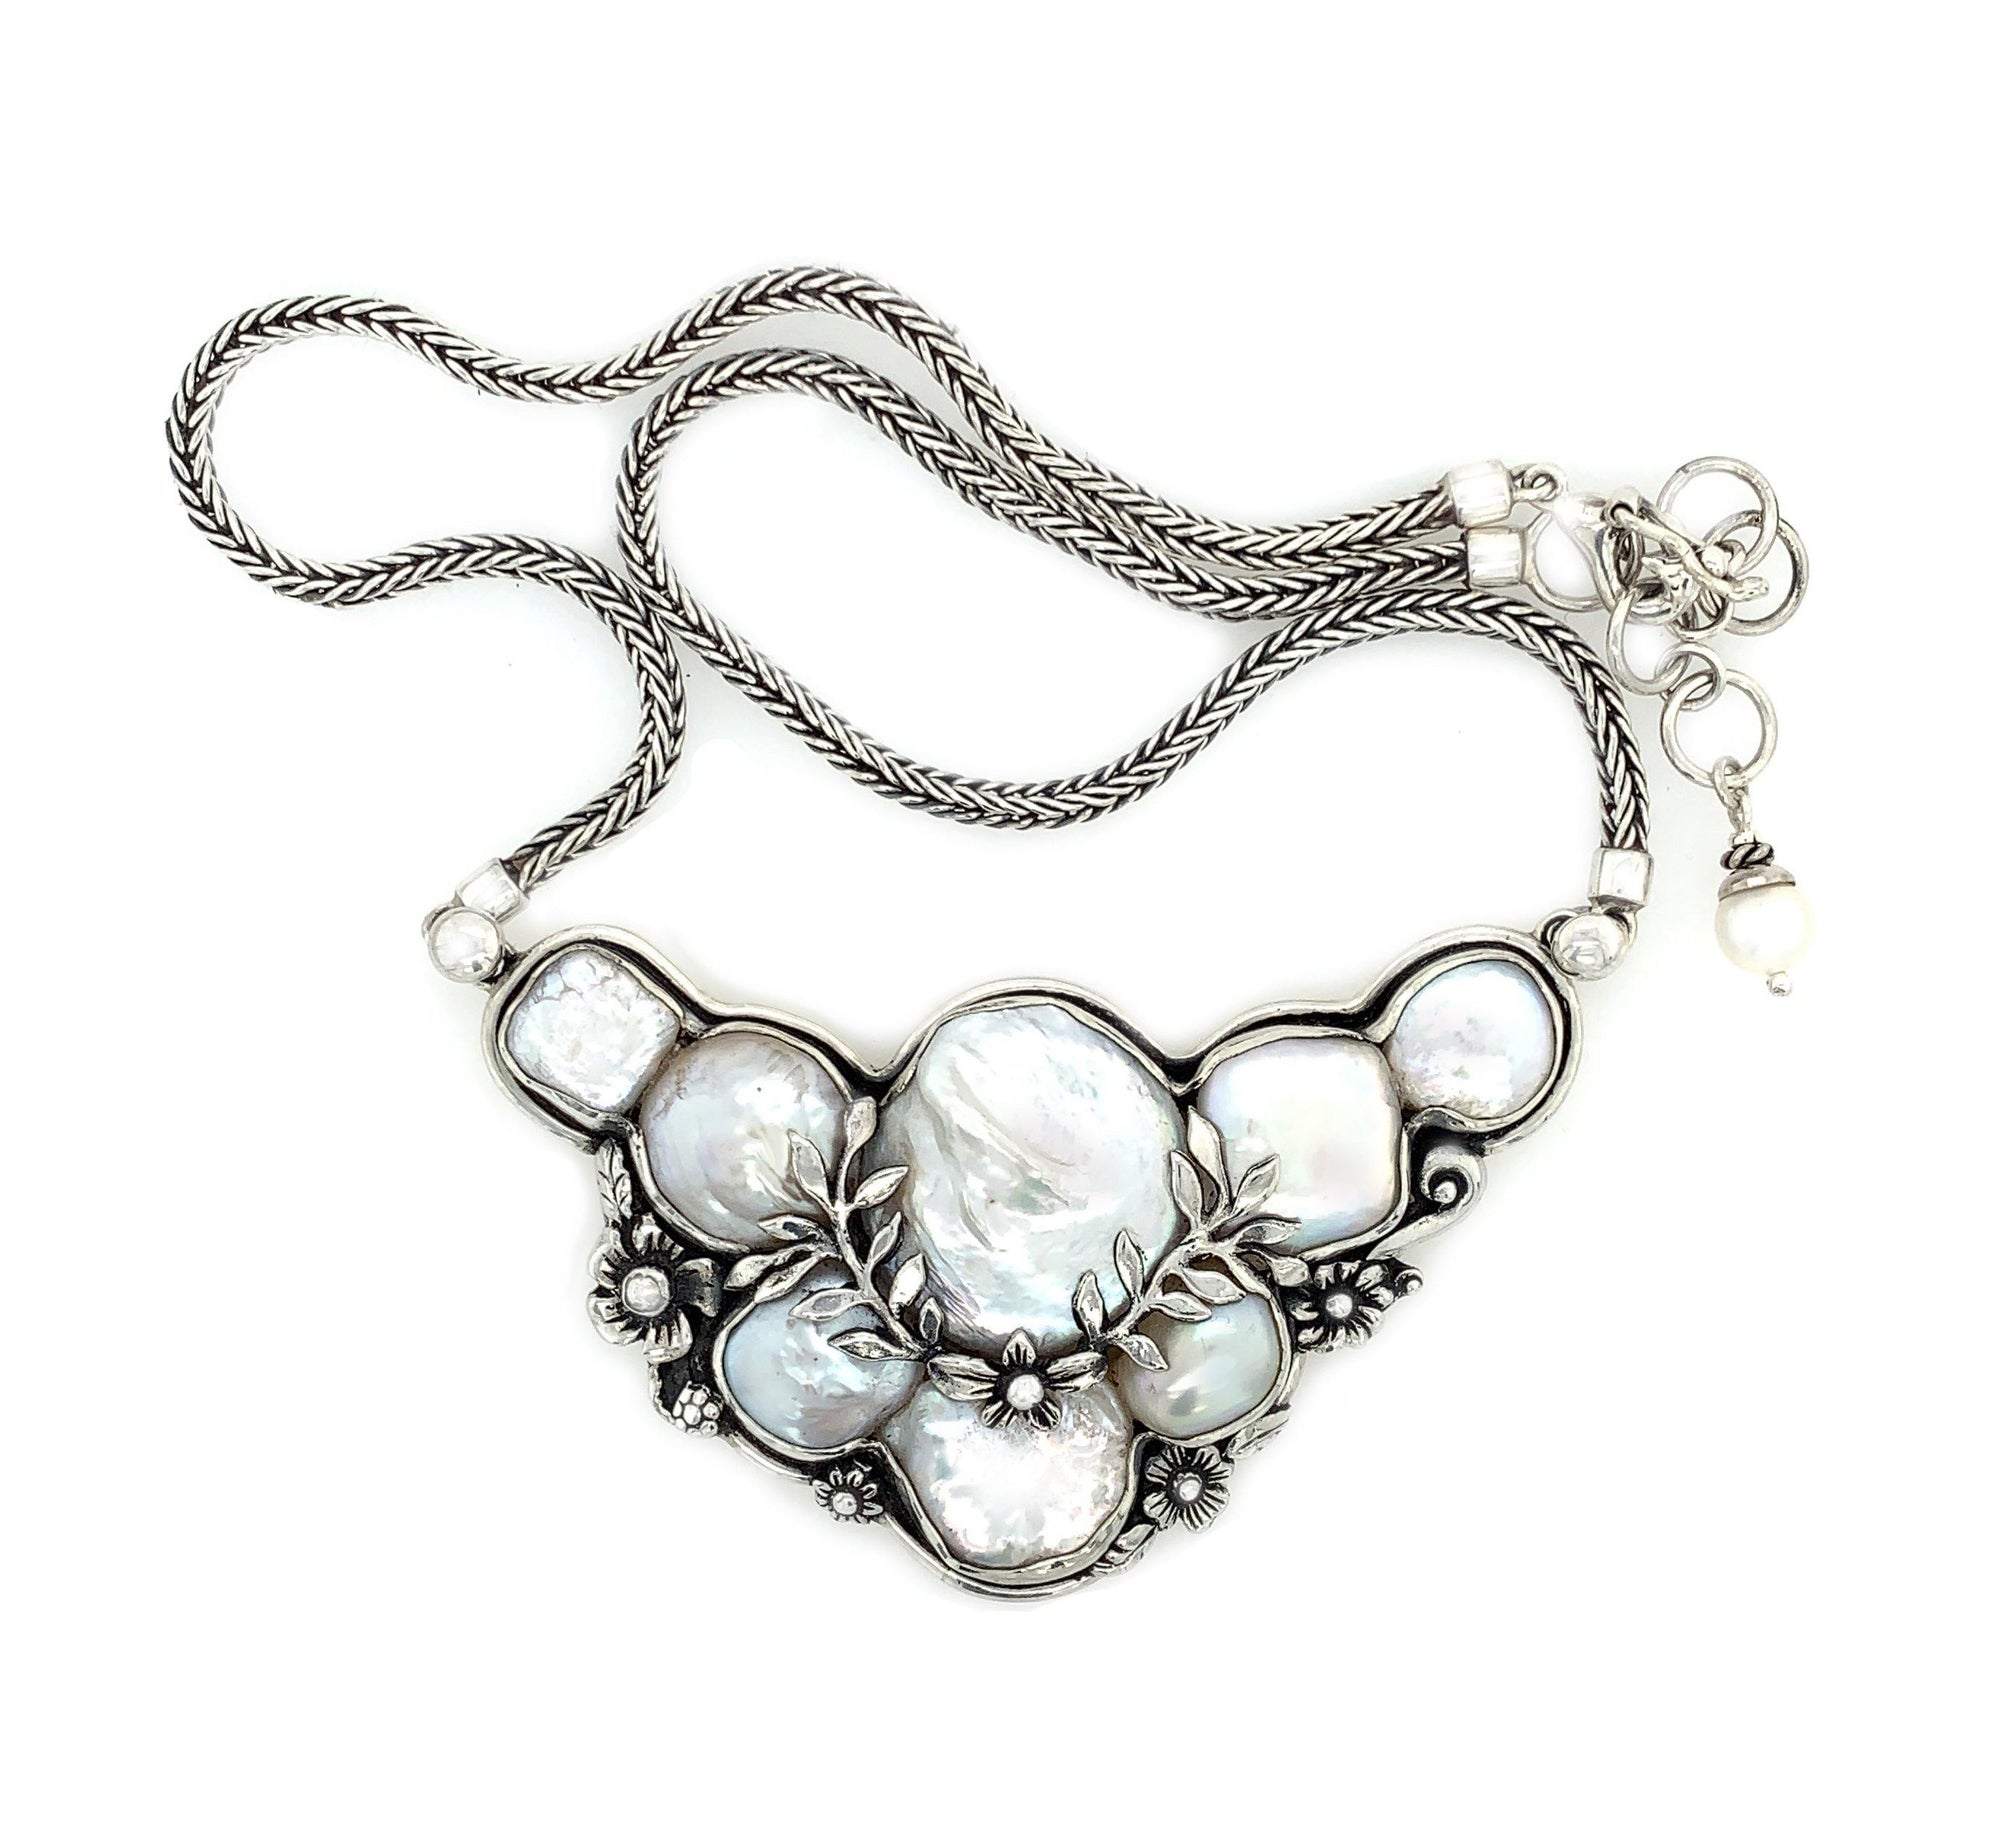 Baroque Pearl Necklaces - Qinti - The Peruvian Shop